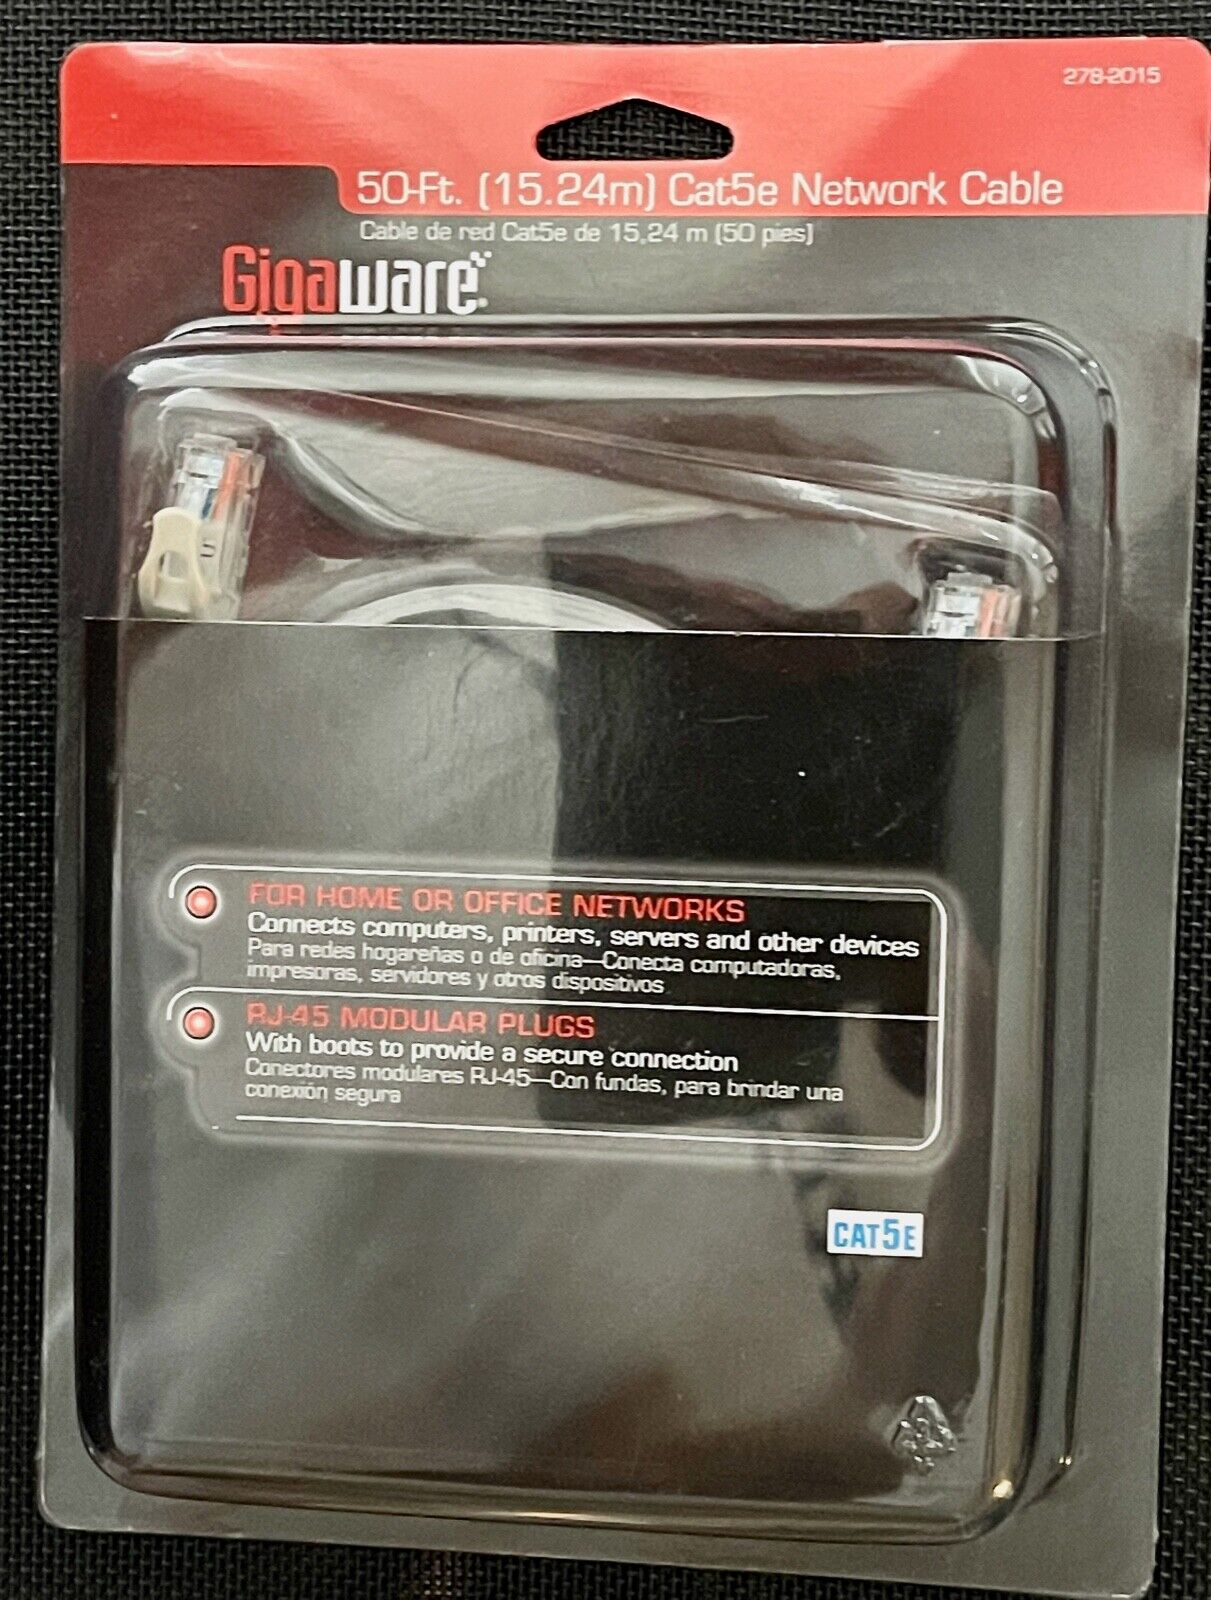 Gigaware® 50-Ft (15.24m) Cat5e Network Cable w/ RJ-45 Modular Plugs - sealed NIB